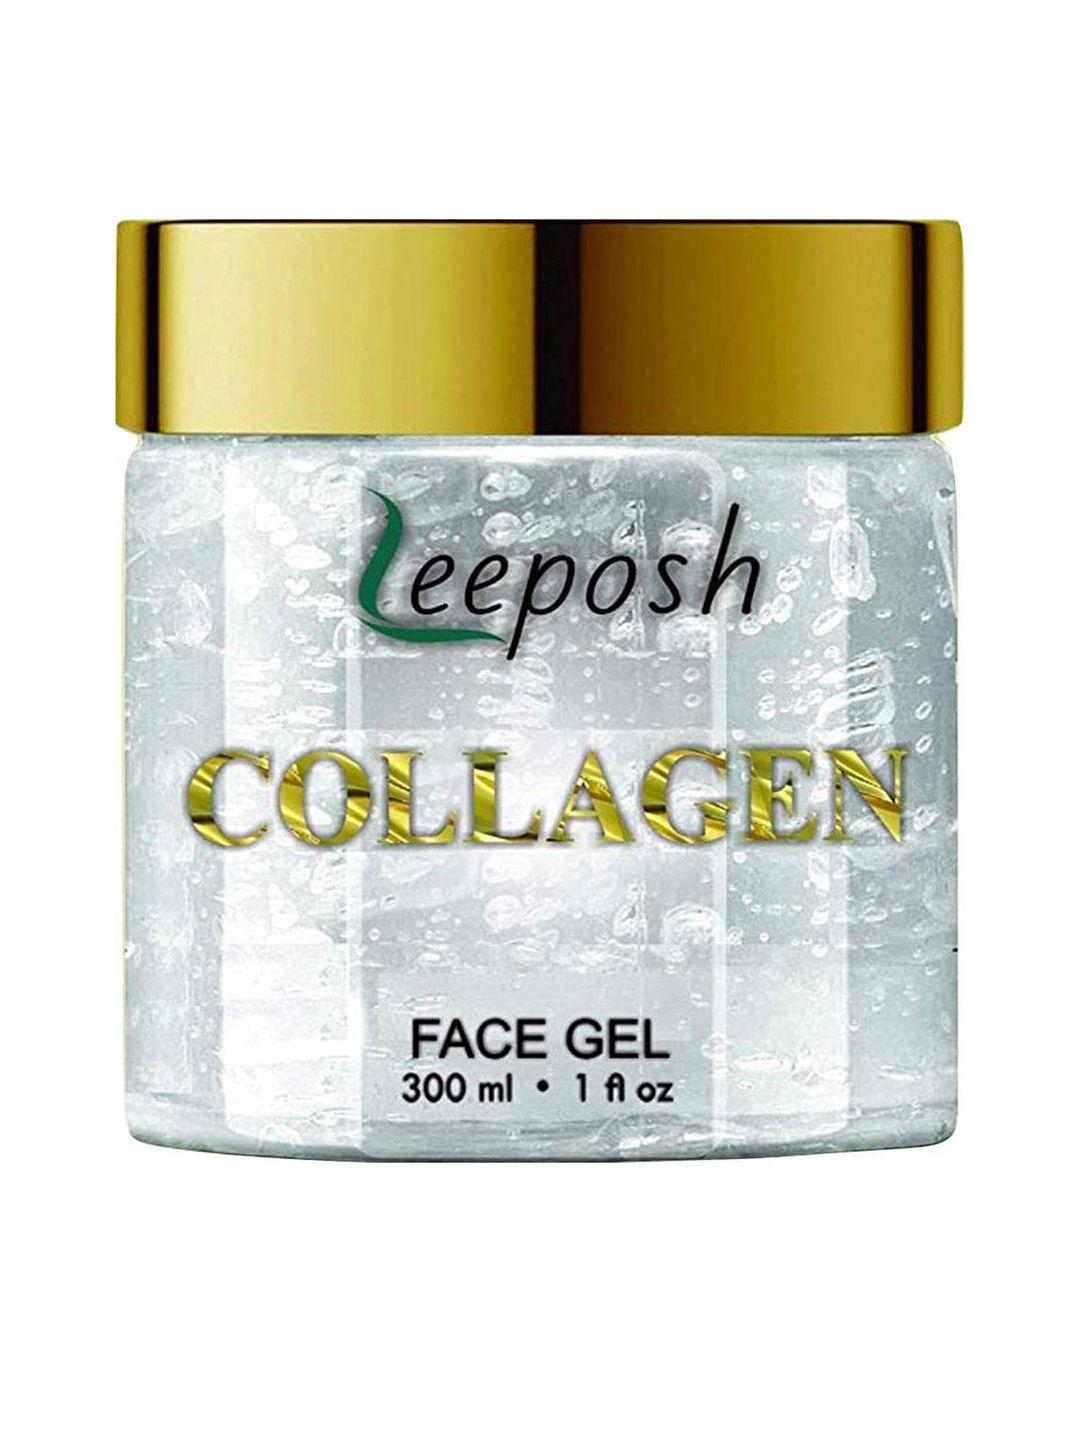 leeposh collagen face gel for hydrated skin - 300 g